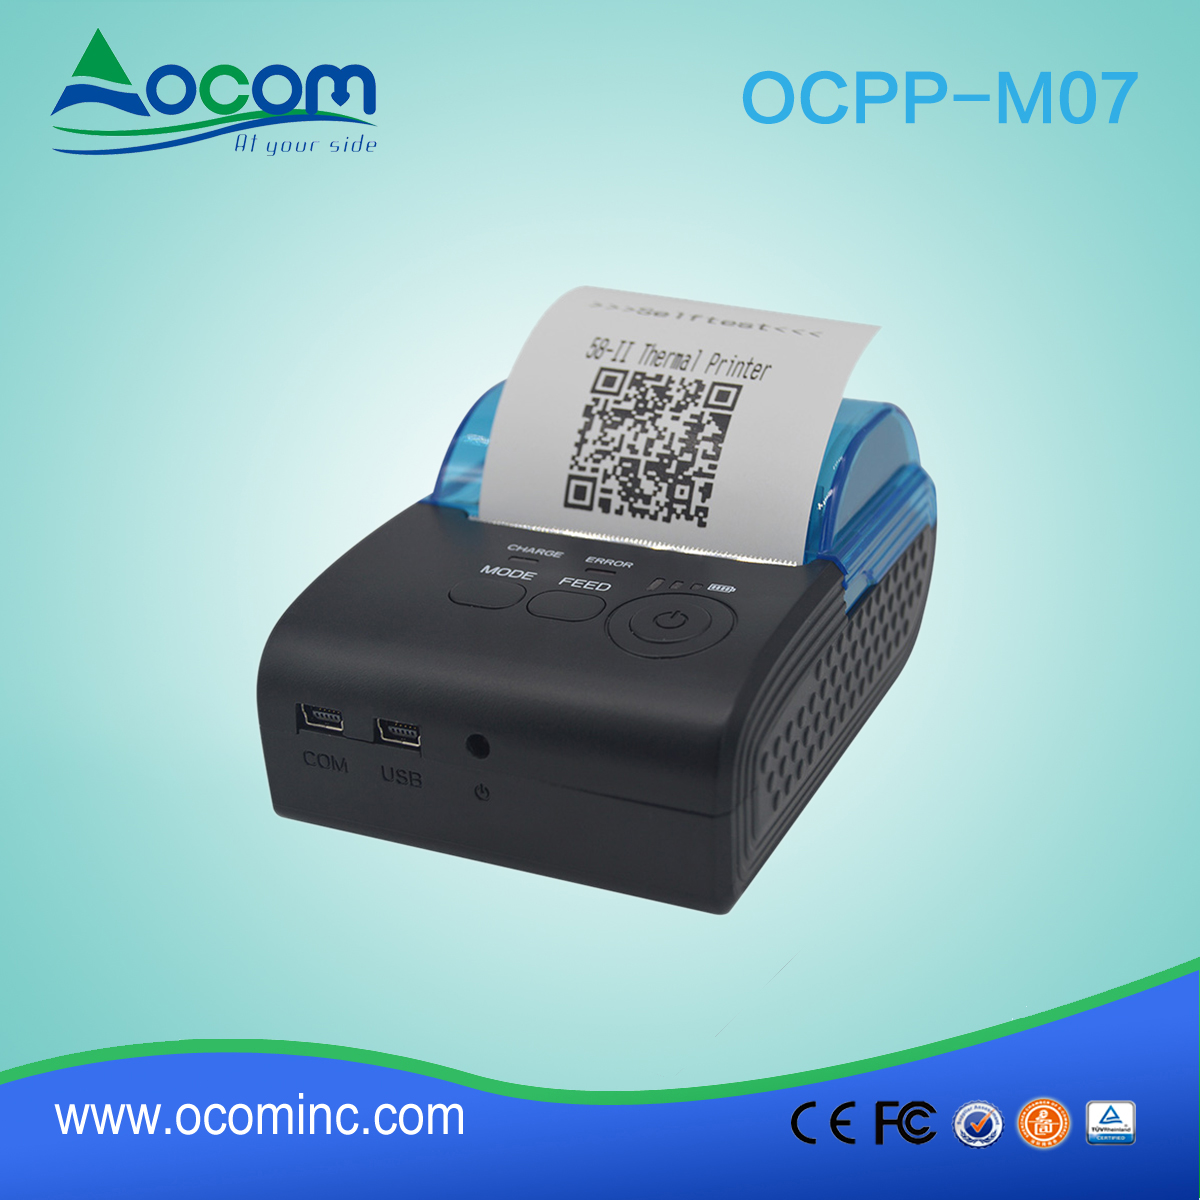 OCPP-M07 handheld portable bluetooth thermal receipt printer